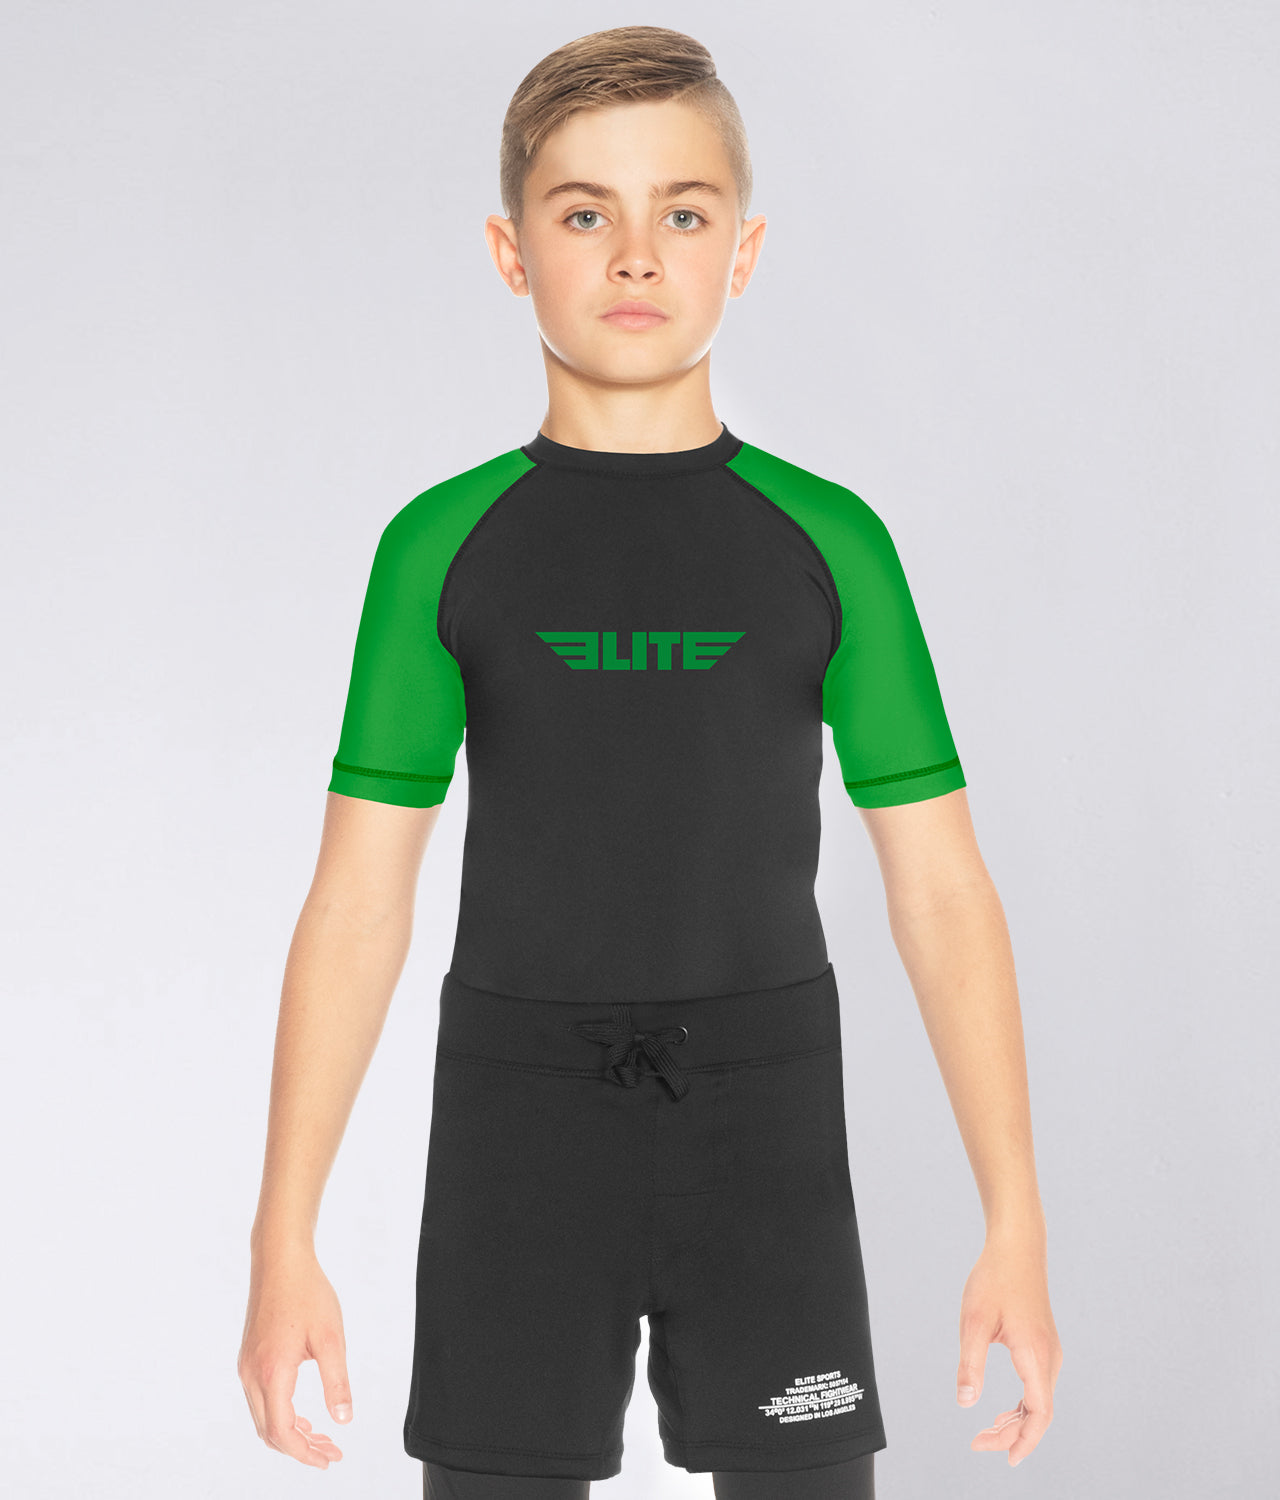 Kids' Standard Green Short Sleeve Training Rash Guard